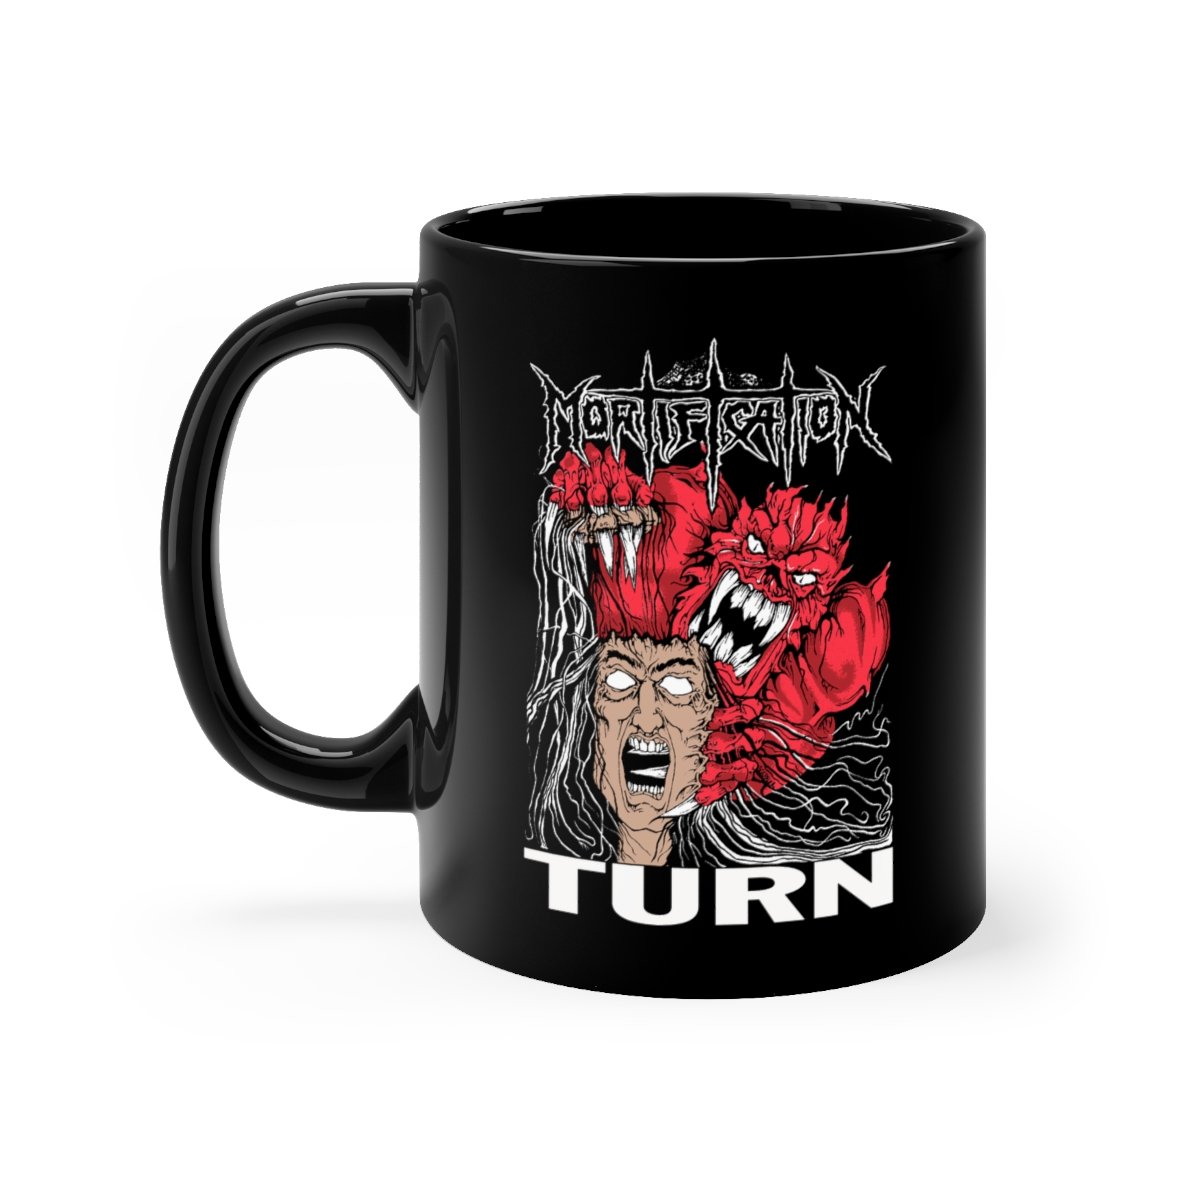 Mortification Turn 11oz Black mug